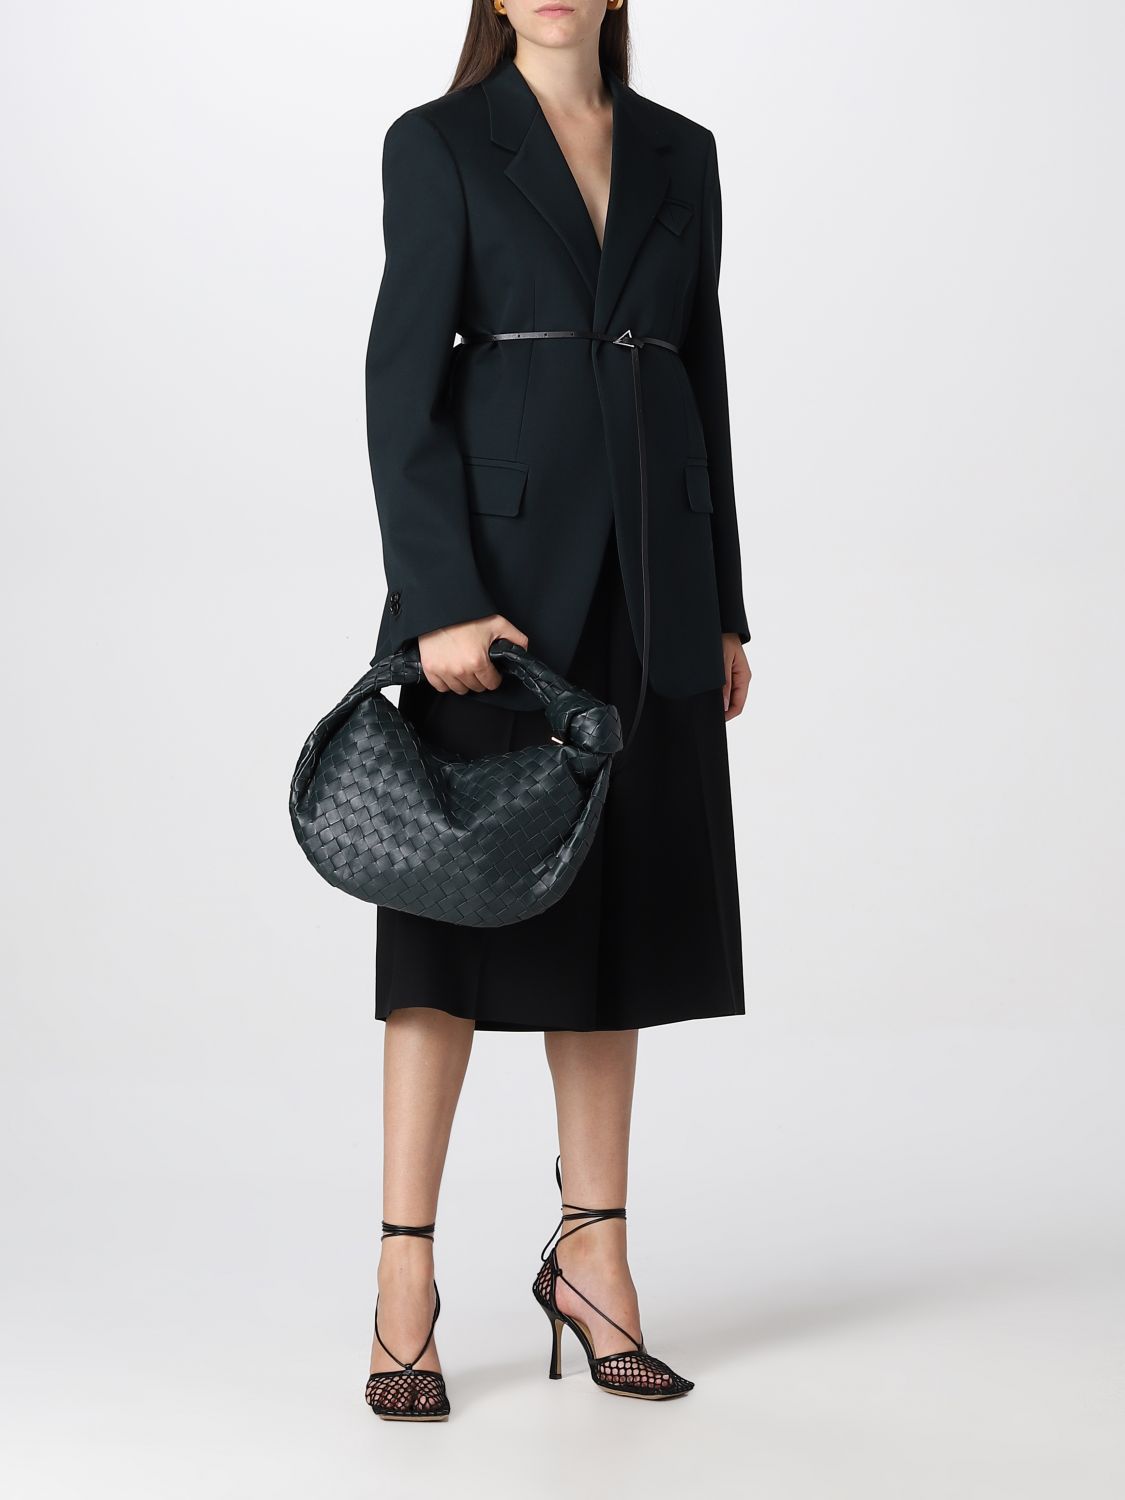 Bottega Veneta® Women's Ostrich-Effect Leather Belted Coat in Pebble. Shop  online now.